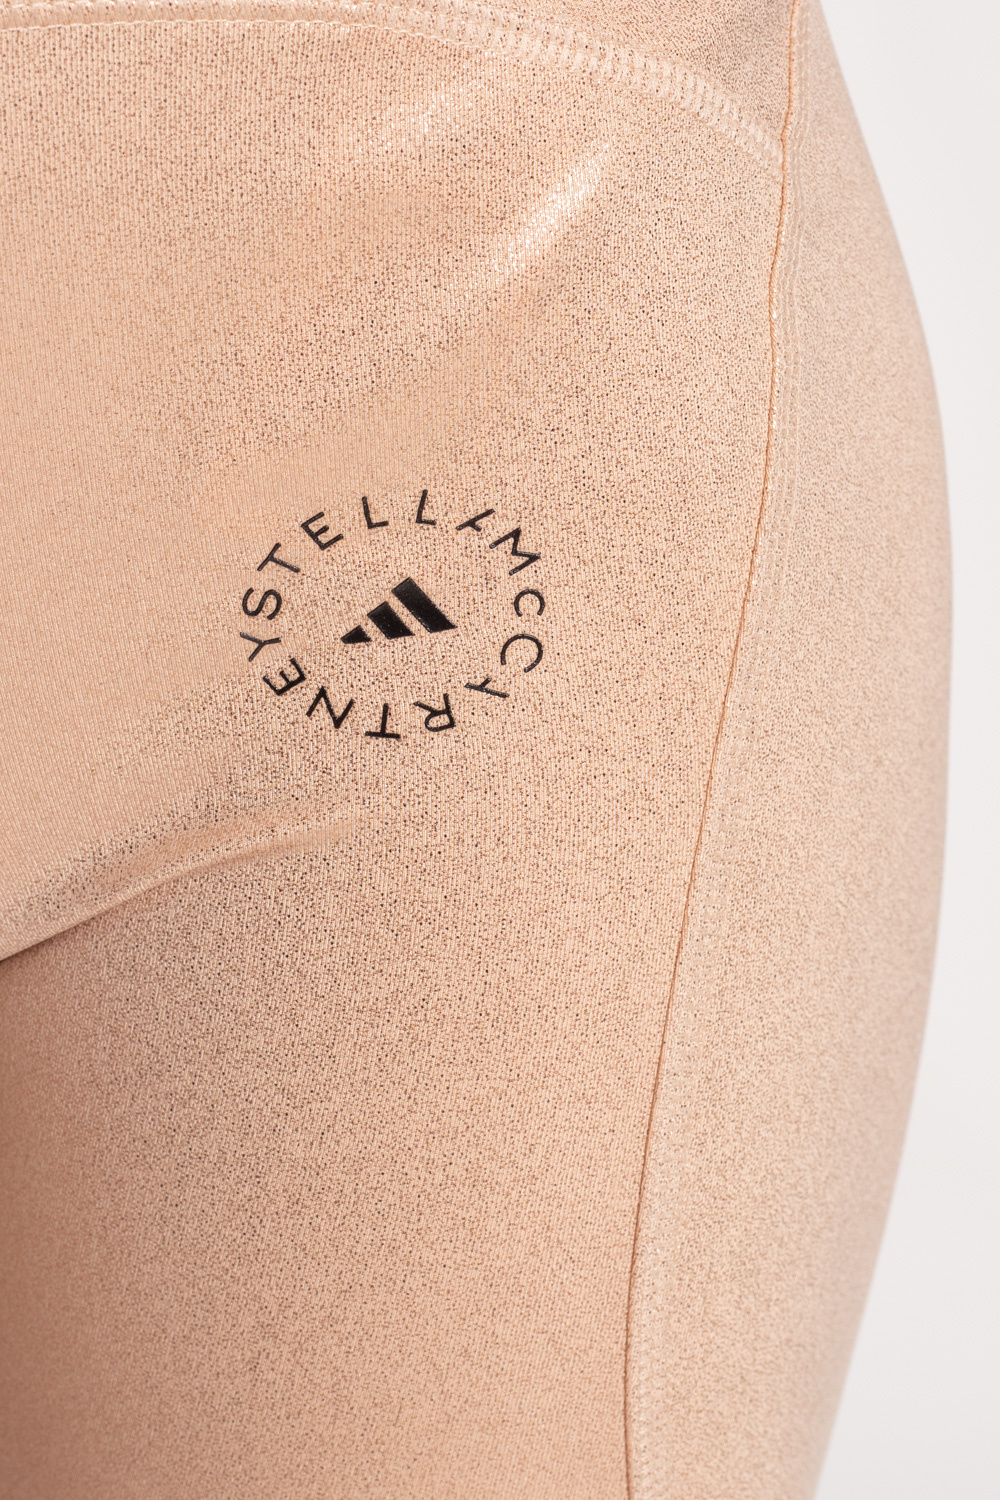 adidas runner by Stella McCartney Cropped leggings with logo